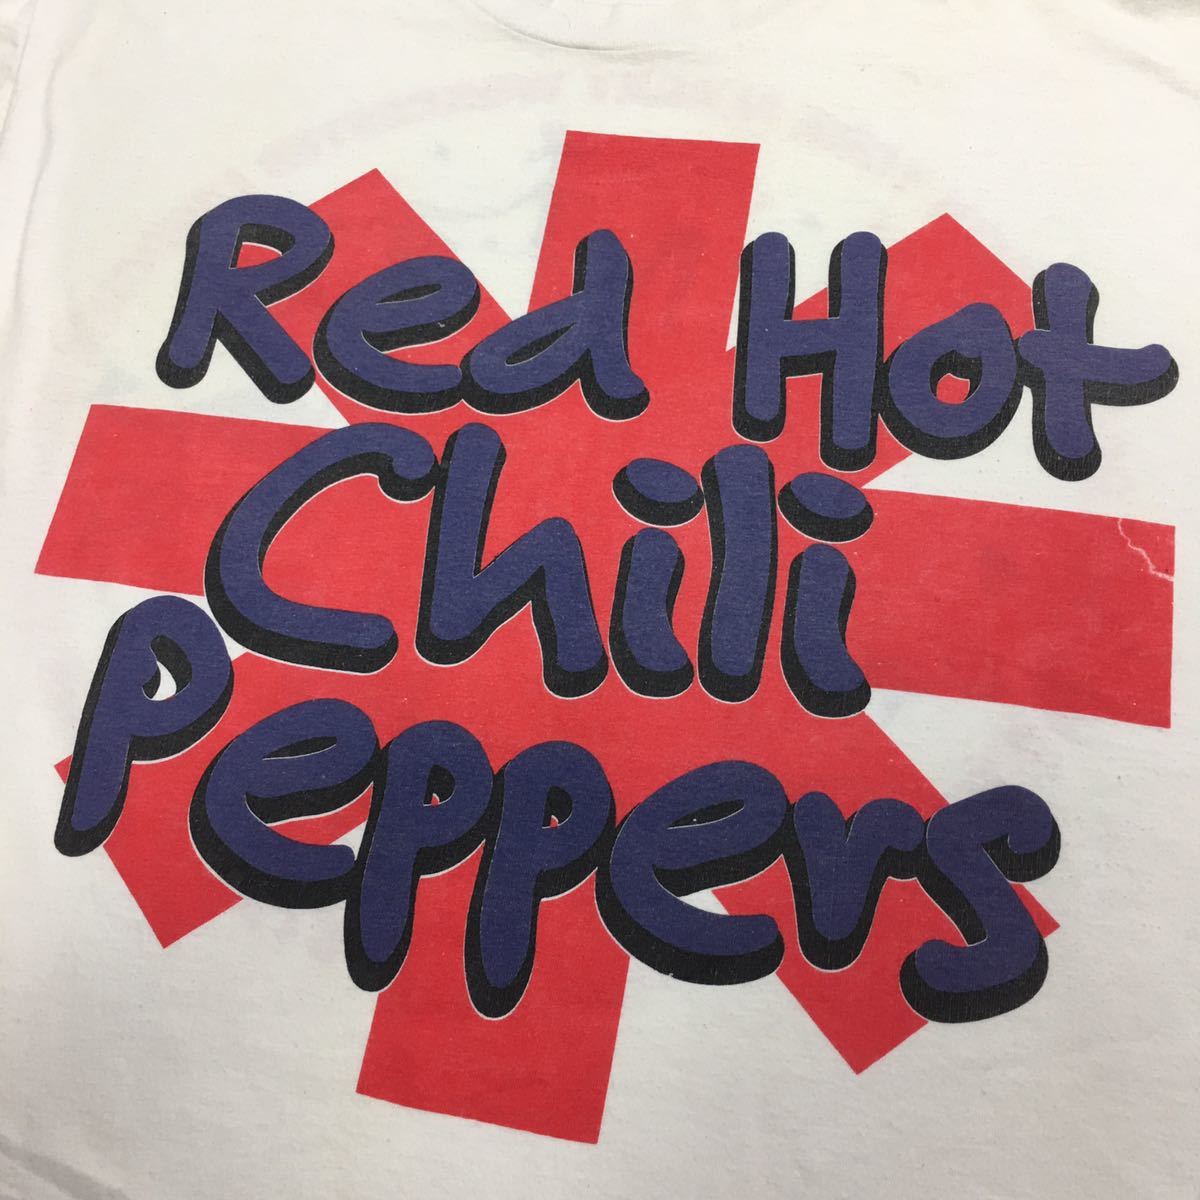 [RED HOT CHILI PEPPERS]90s Vintage футболка XL красный hot Chile перец z б/у одежда re Chile блокировка частота SONIC YOUTH HOLE BJORK